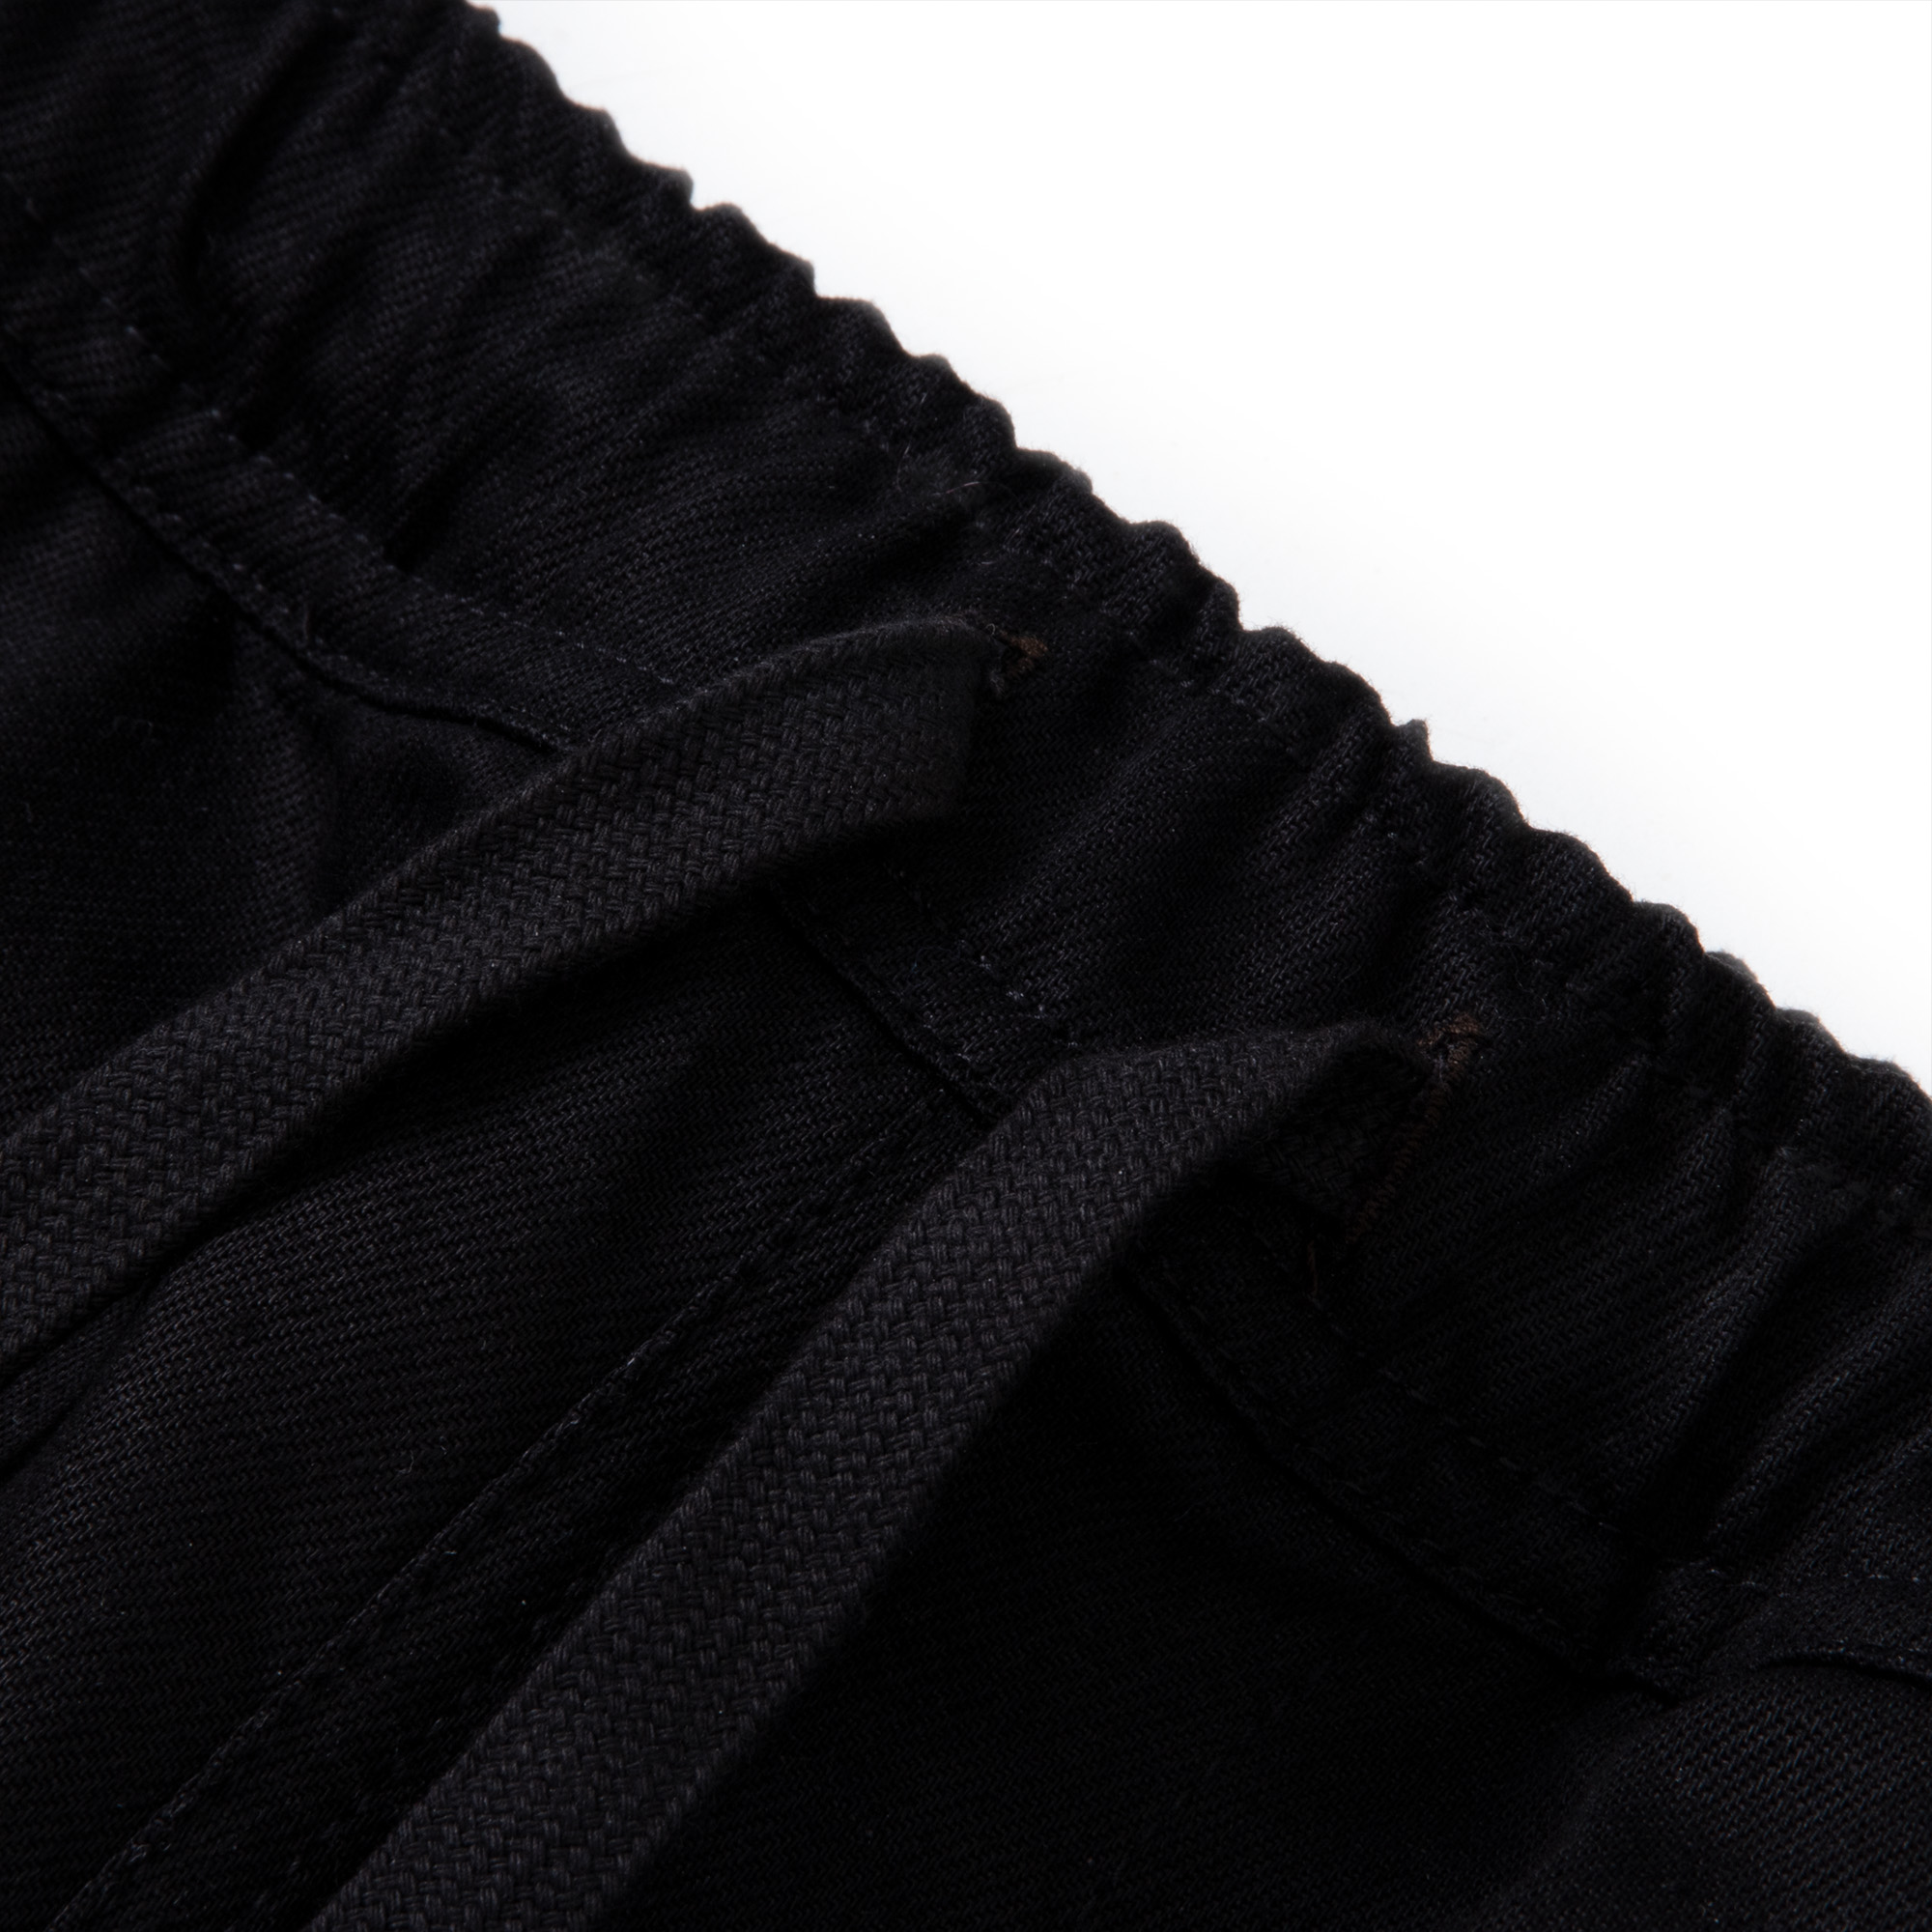 DirtyCoins Cargo Shorts - Black